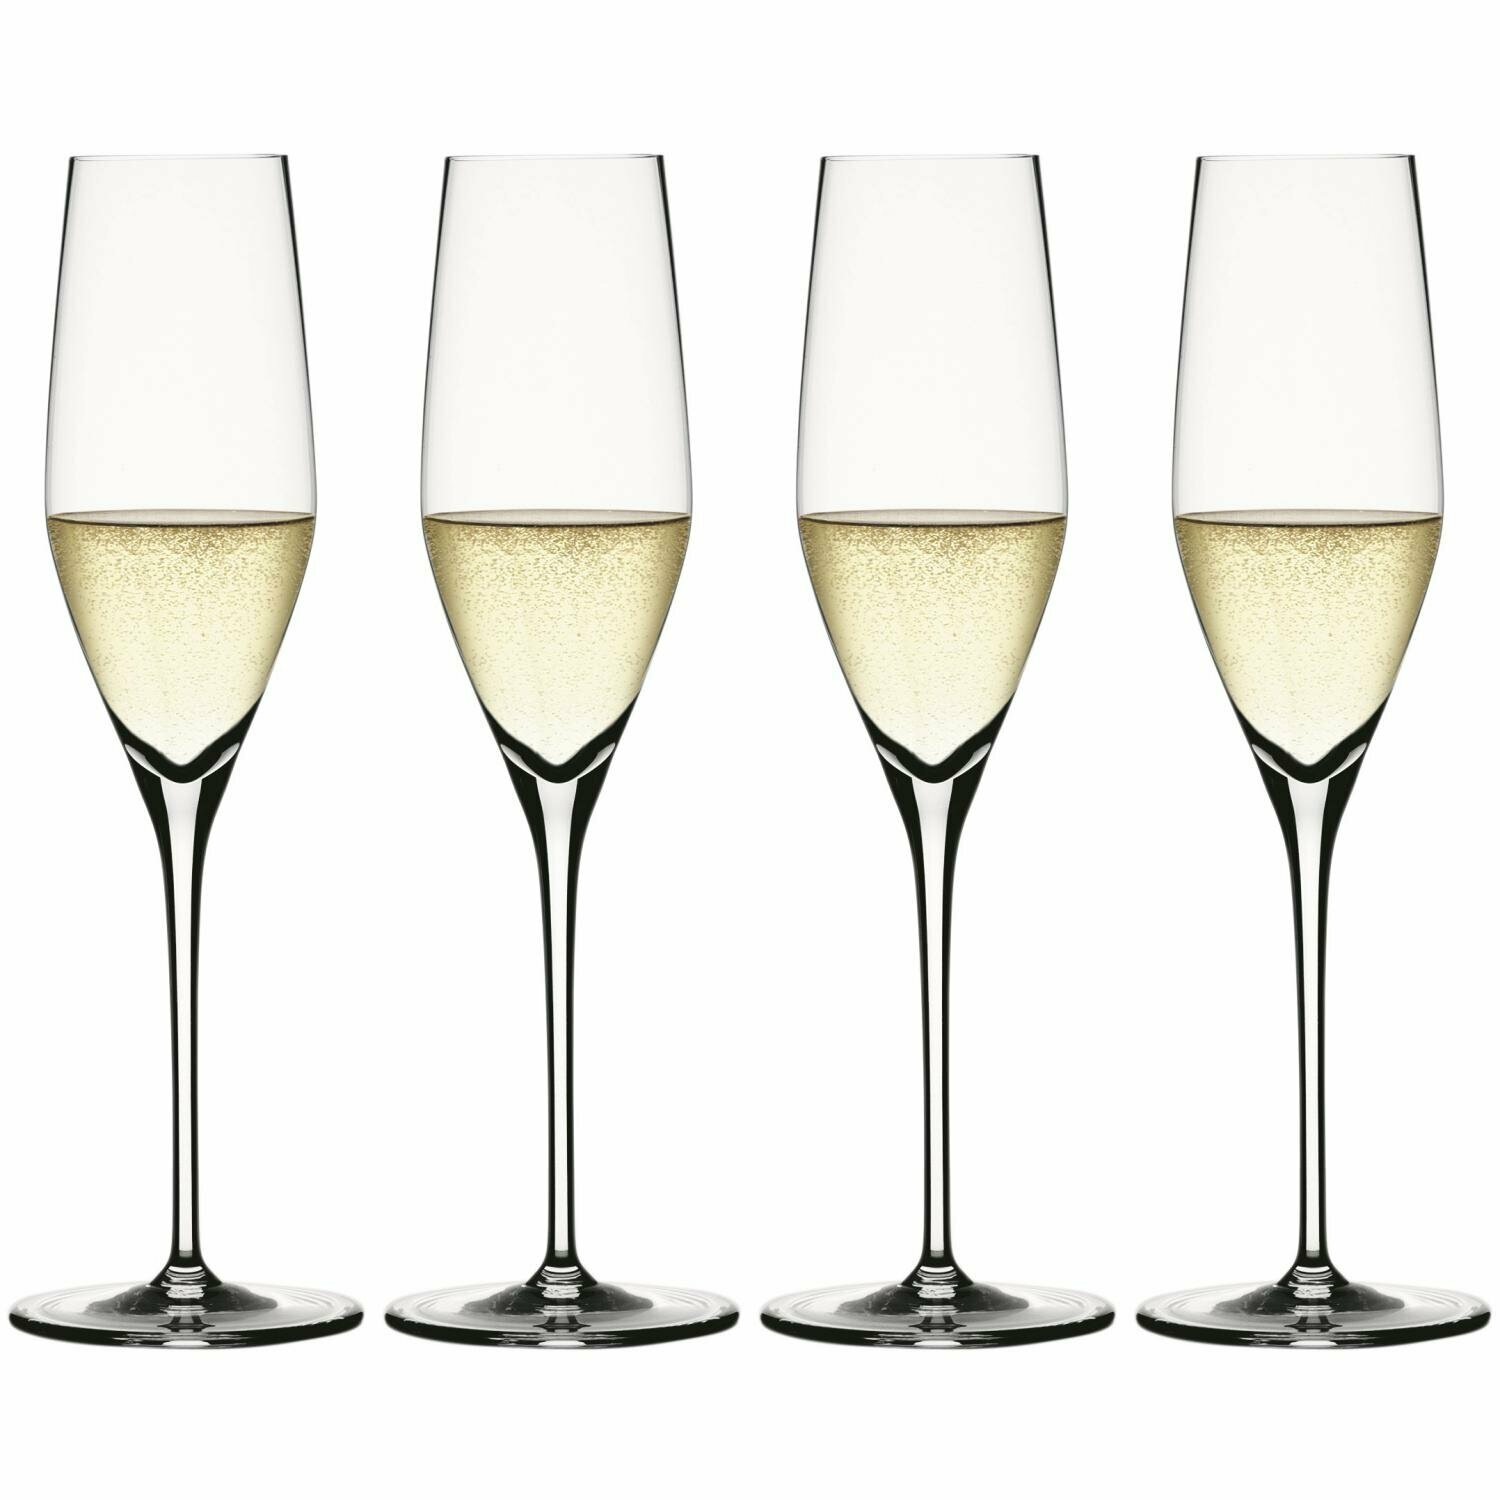 4 бокала для шампанского Spiegelau Authentis Champagne Flute 190 мл (арт. 4400187)